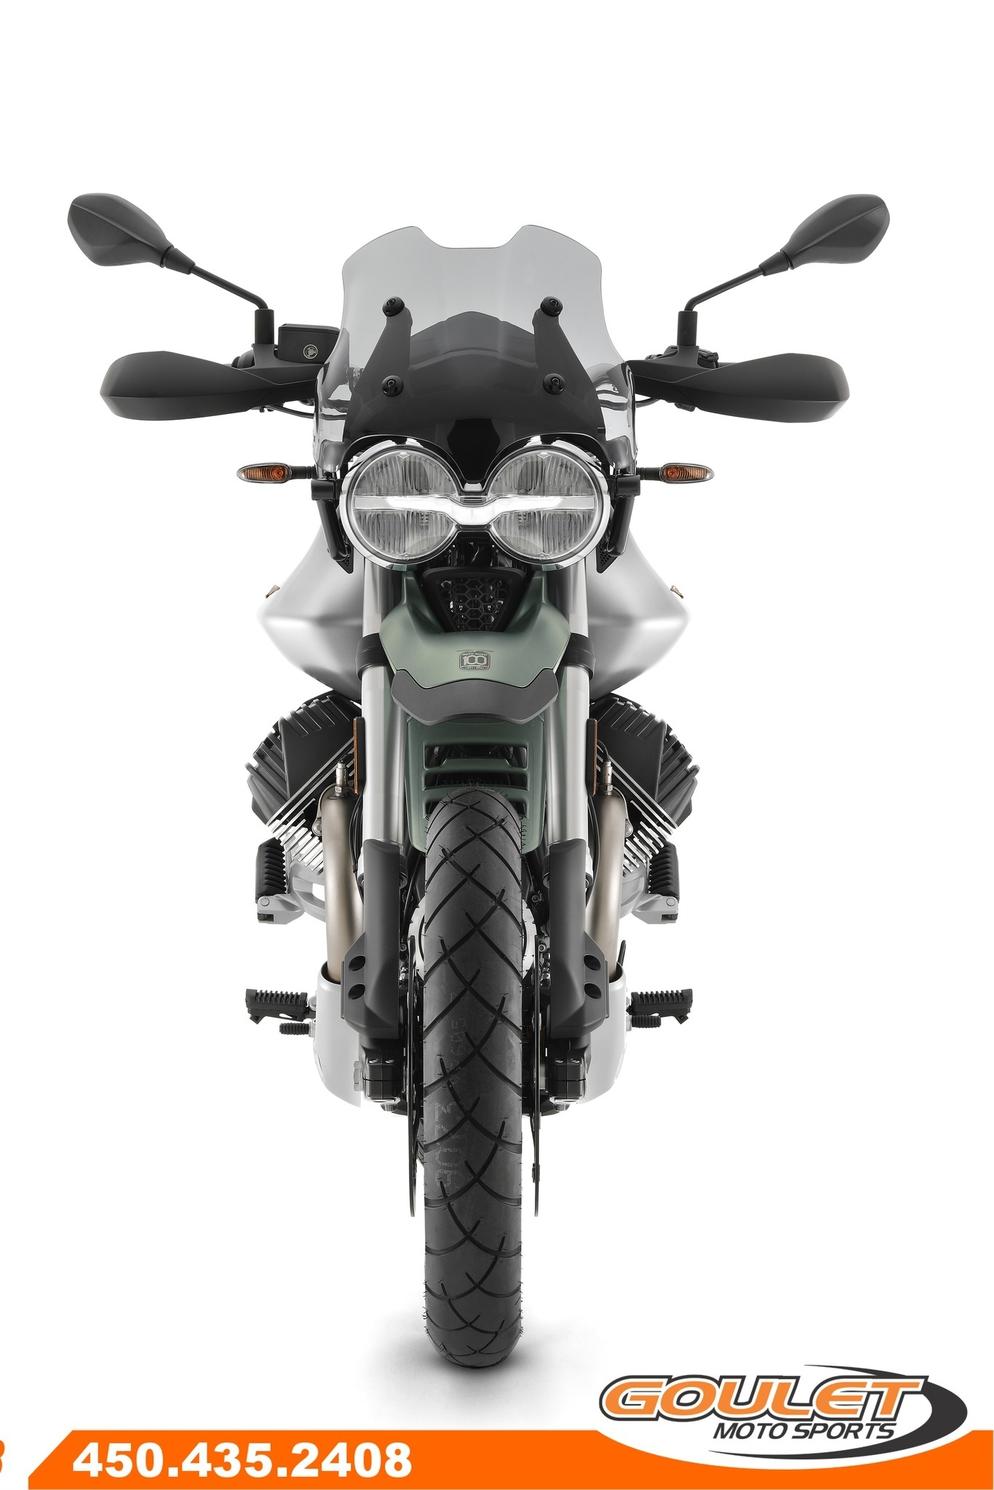 Moto Guzzi V85tt 2022 en vente à Montréal - Mecamoto